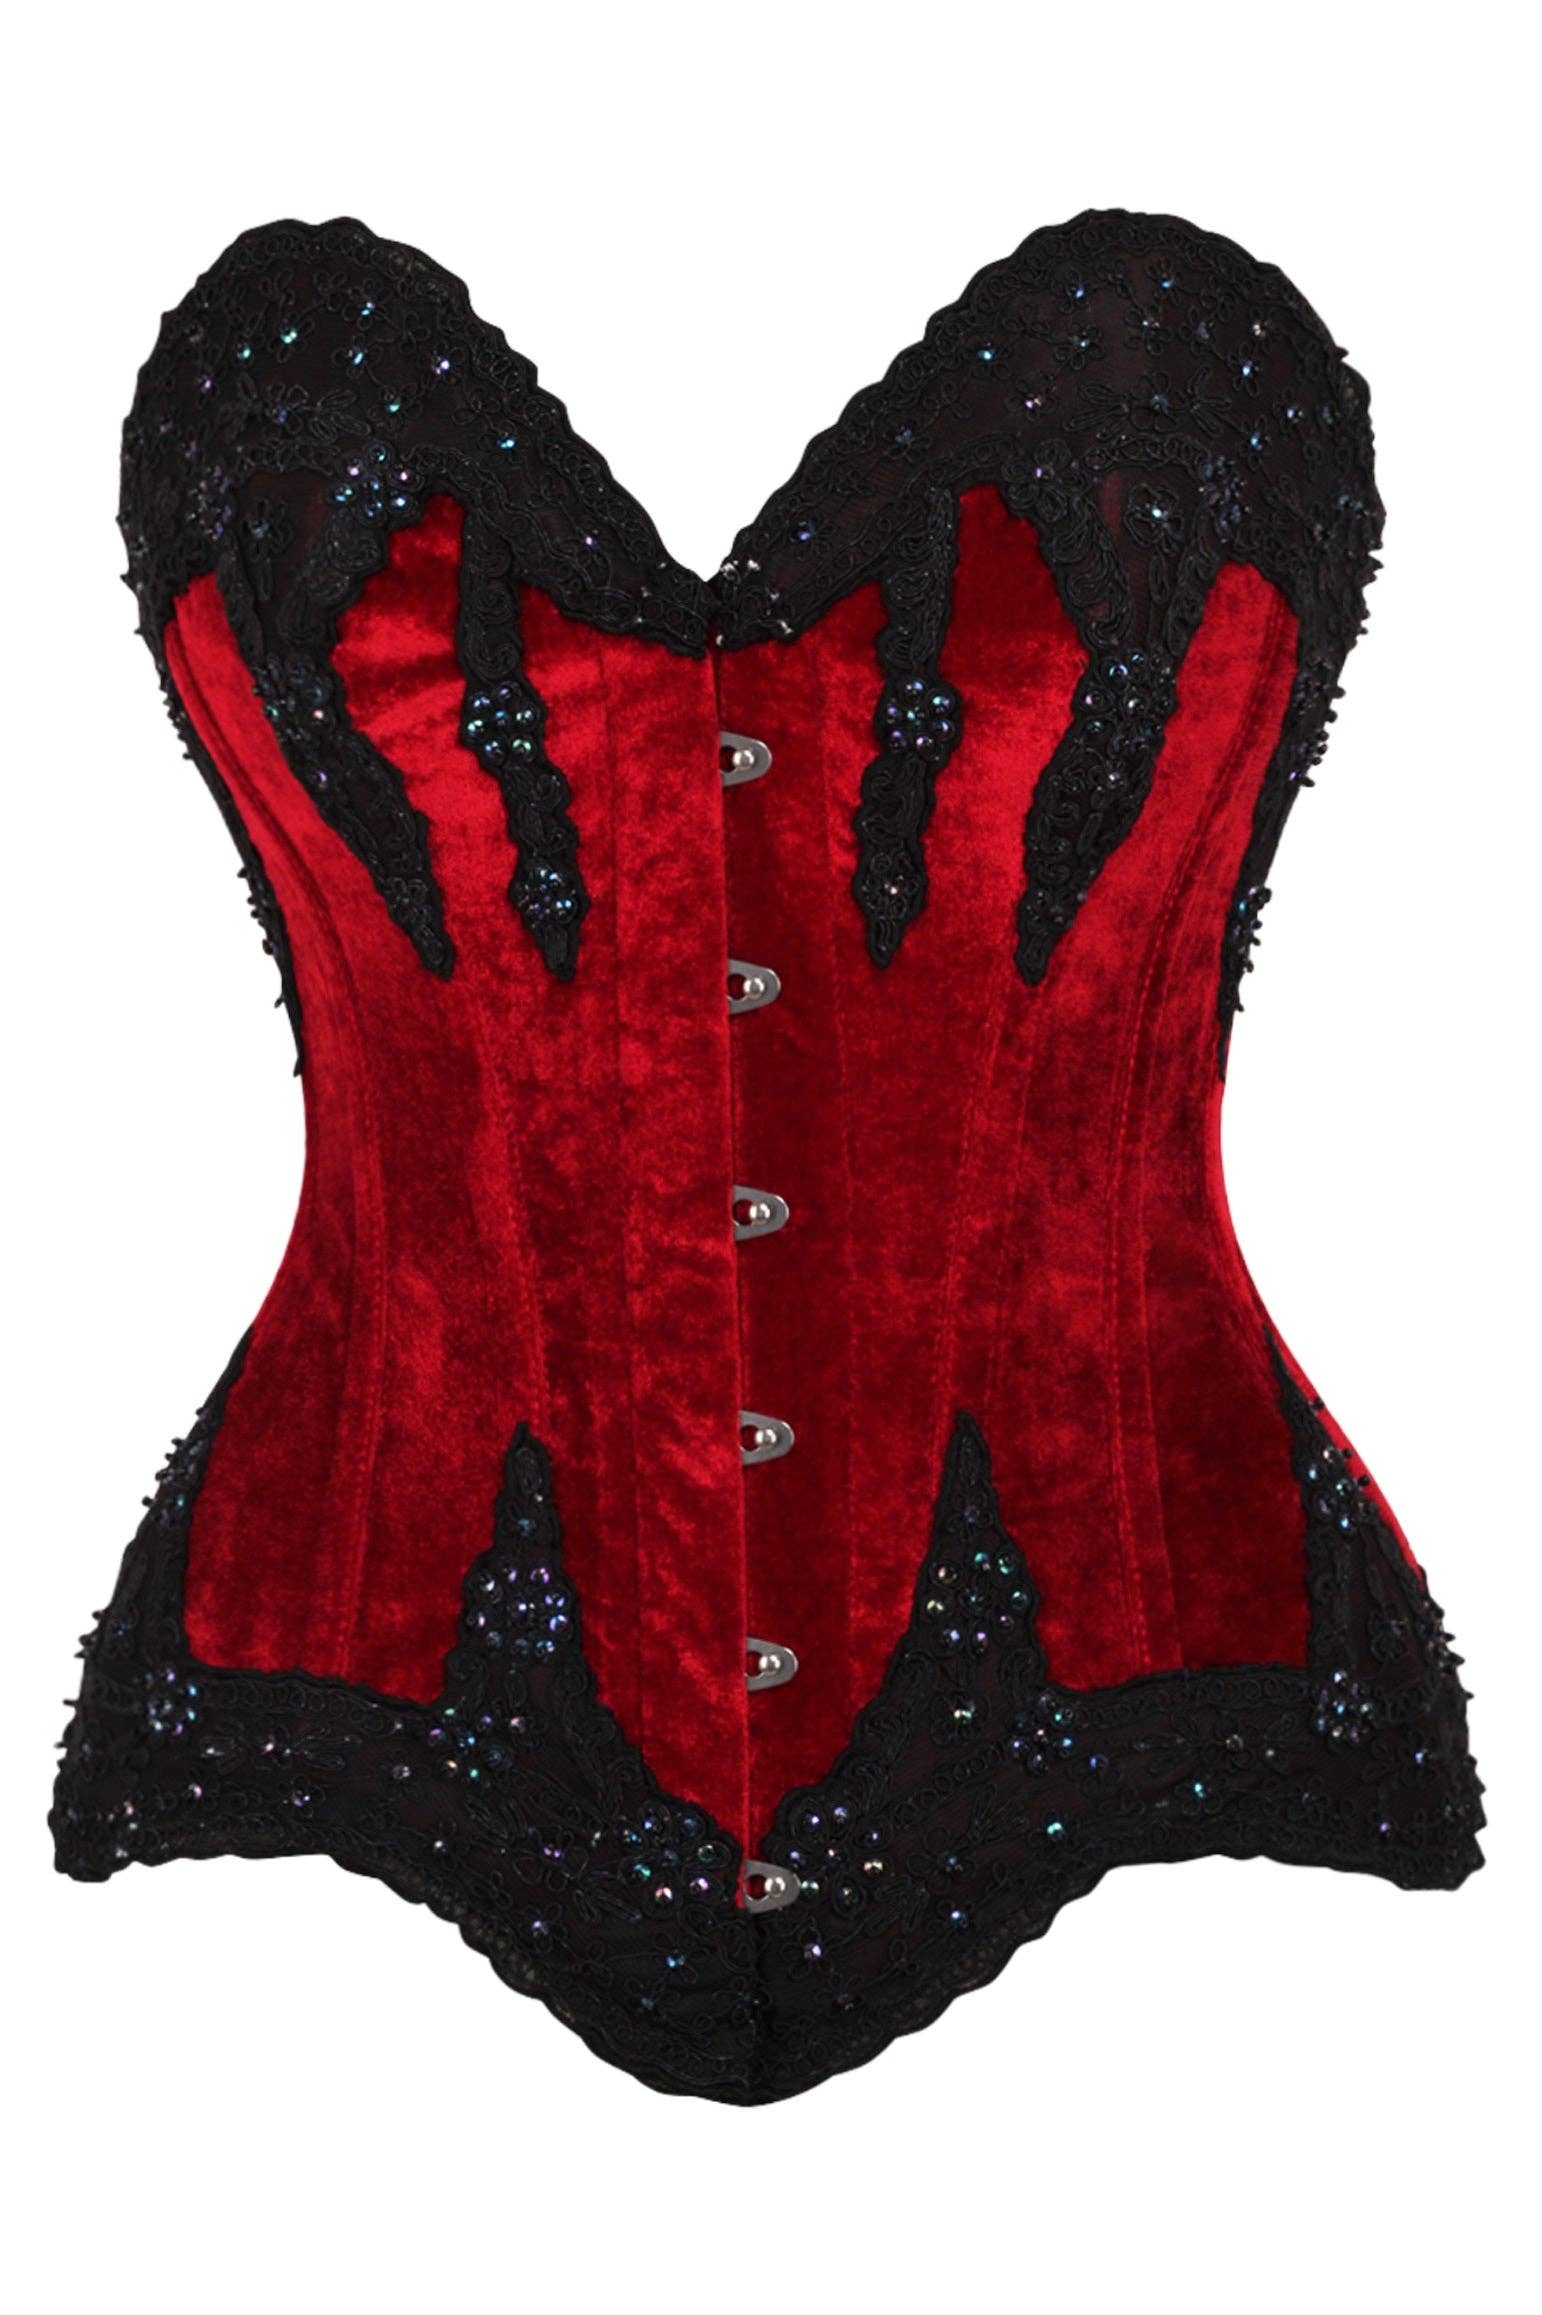 Daisy corsets Top Drawer Dark Red Velvet Off-The-Shoulder Steel Boned Corset